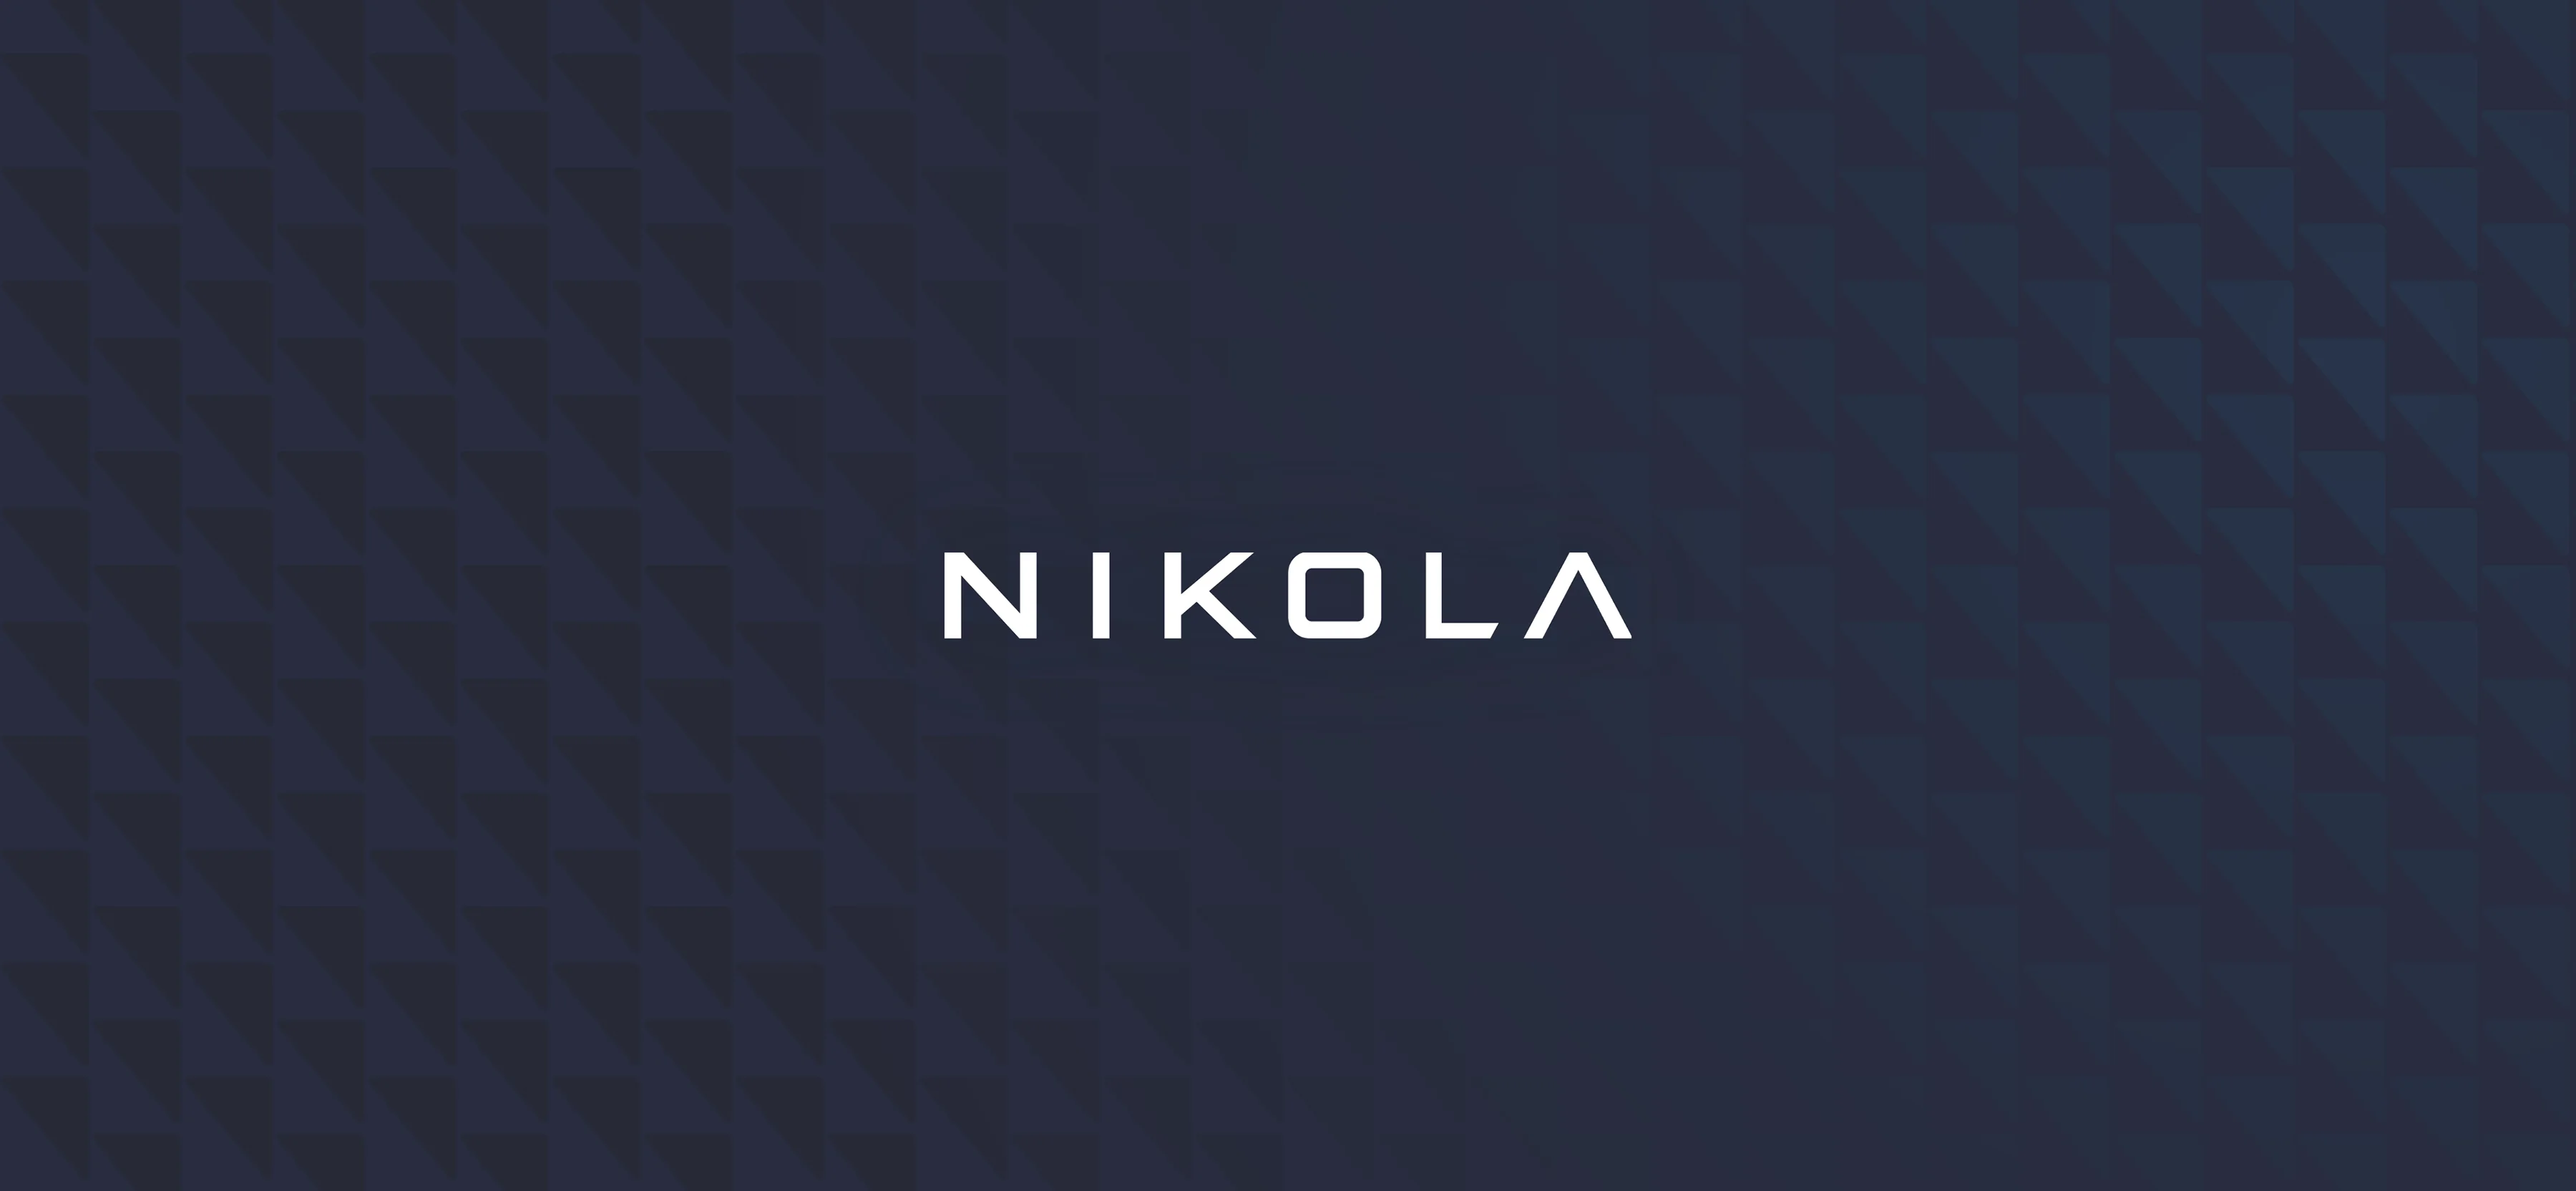 230811 nikola logo 1